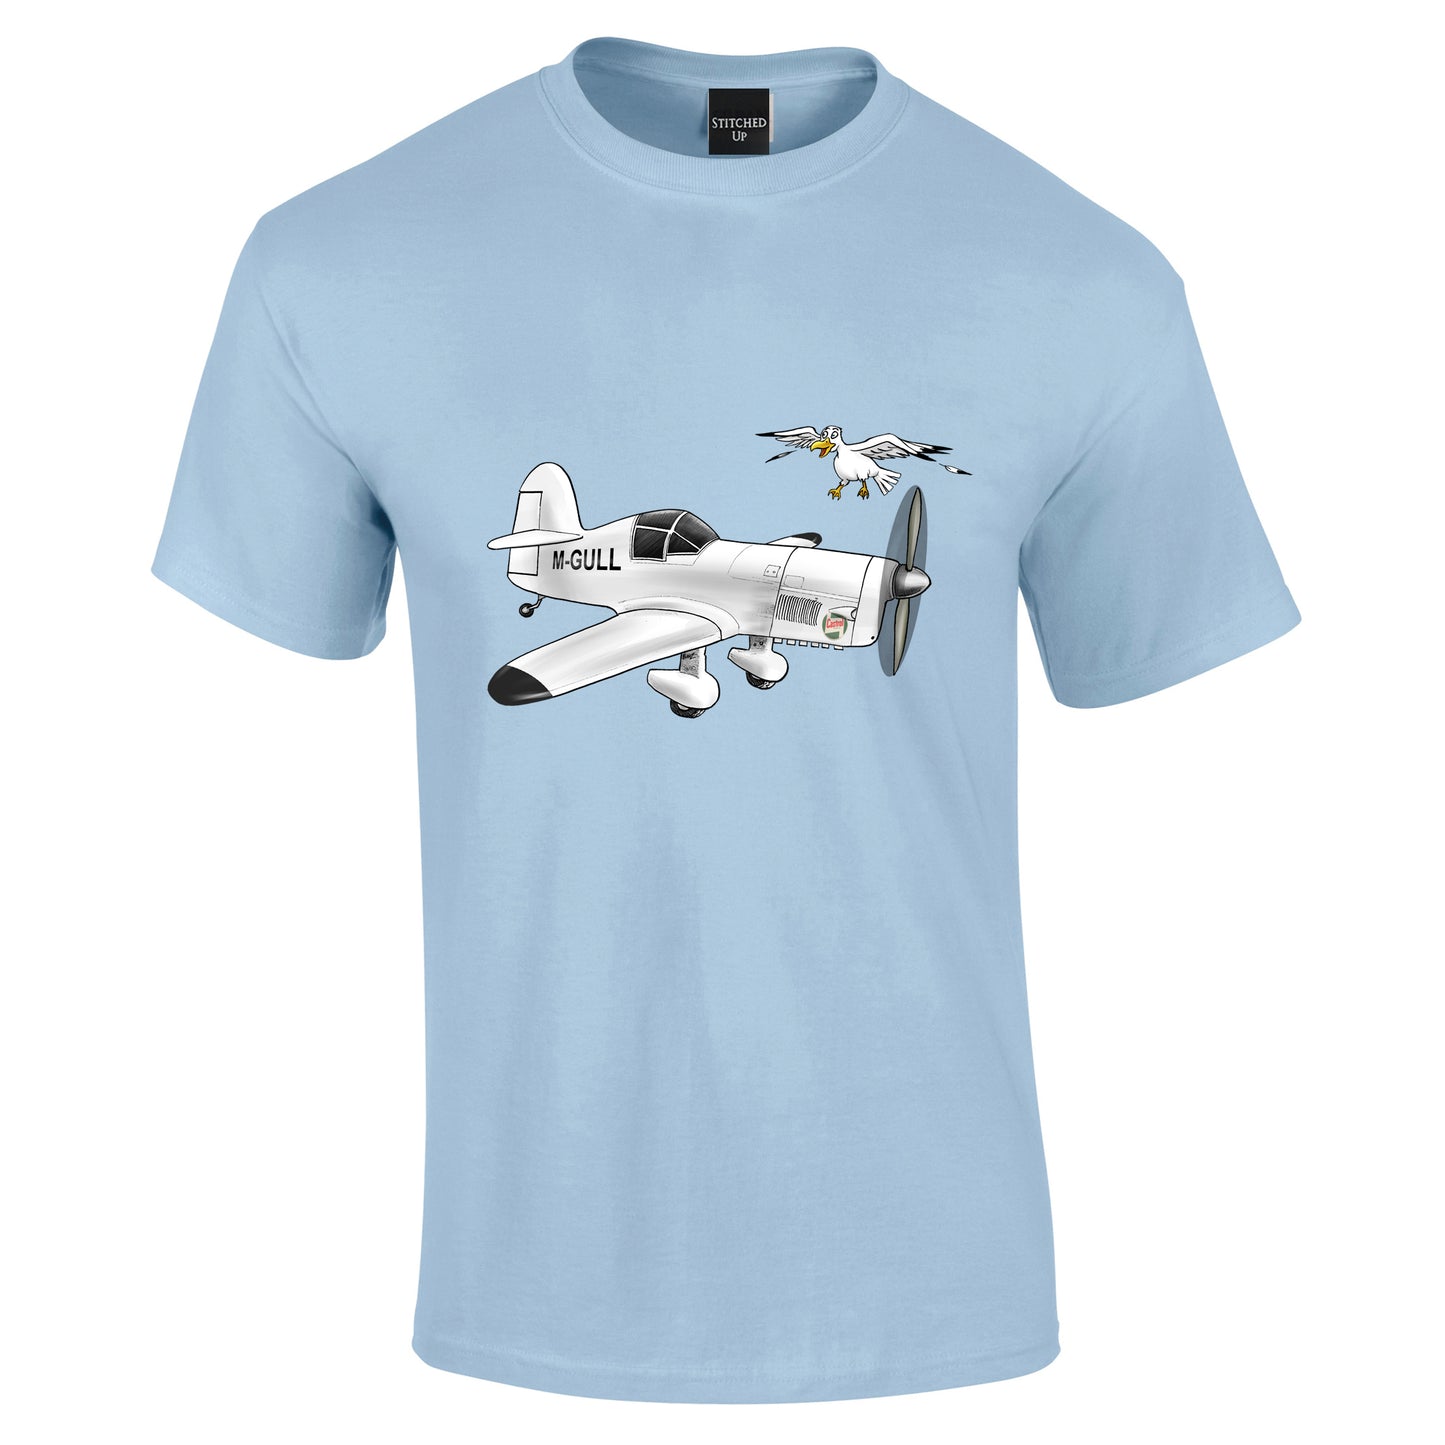 The Percival Mew Gull Aircraft T-Shirt